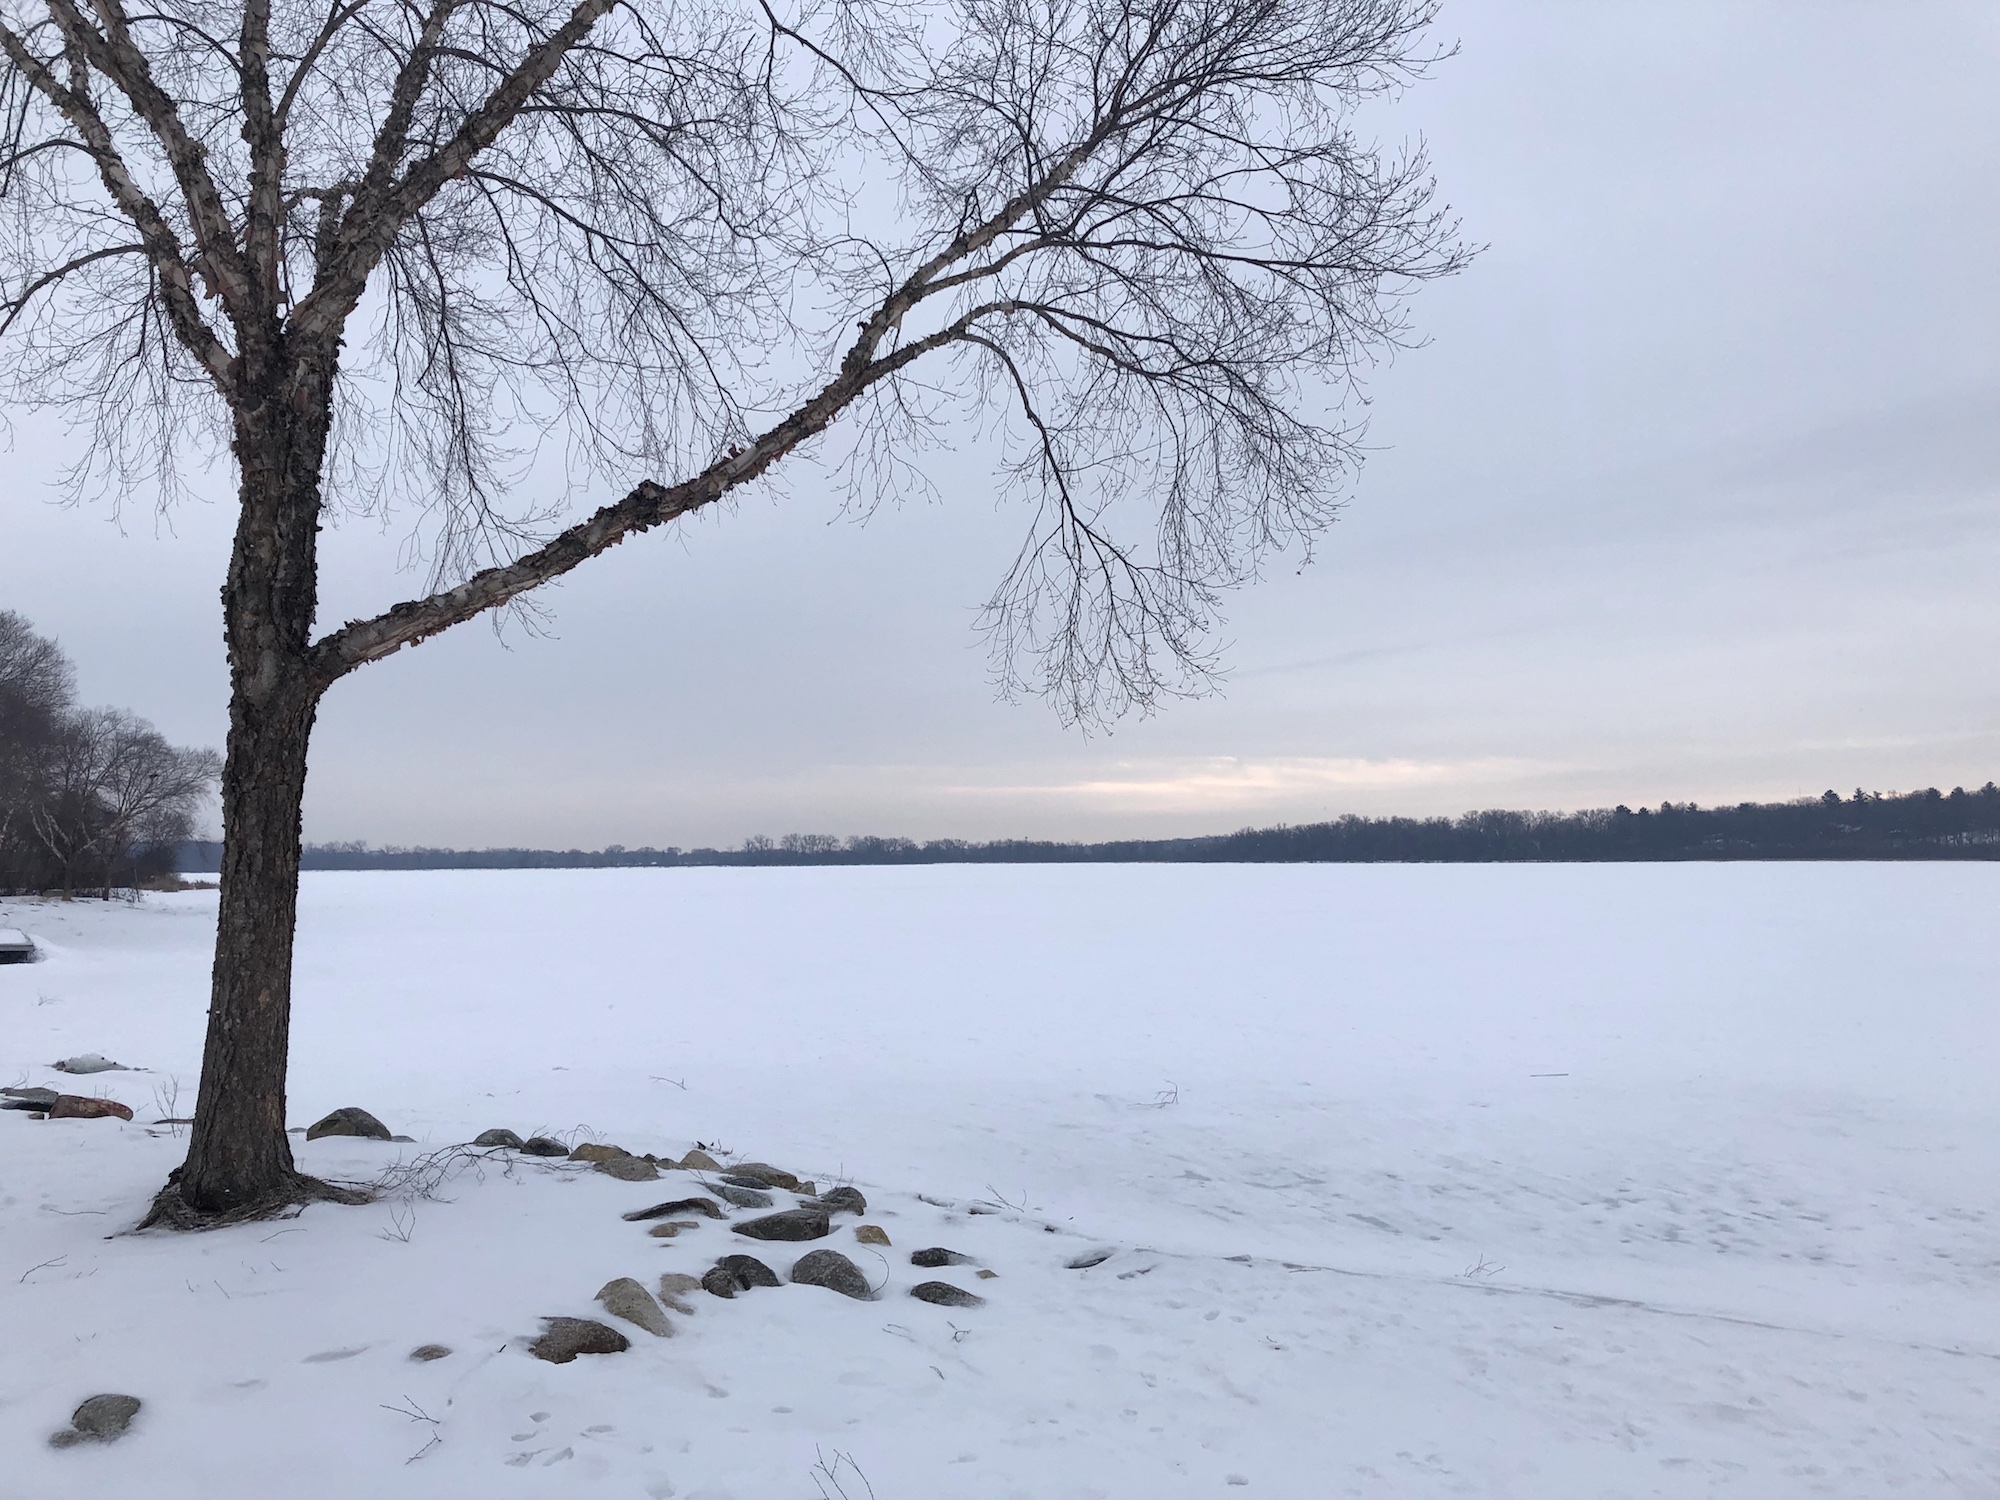 Lake Wingra on March 8, 2019.